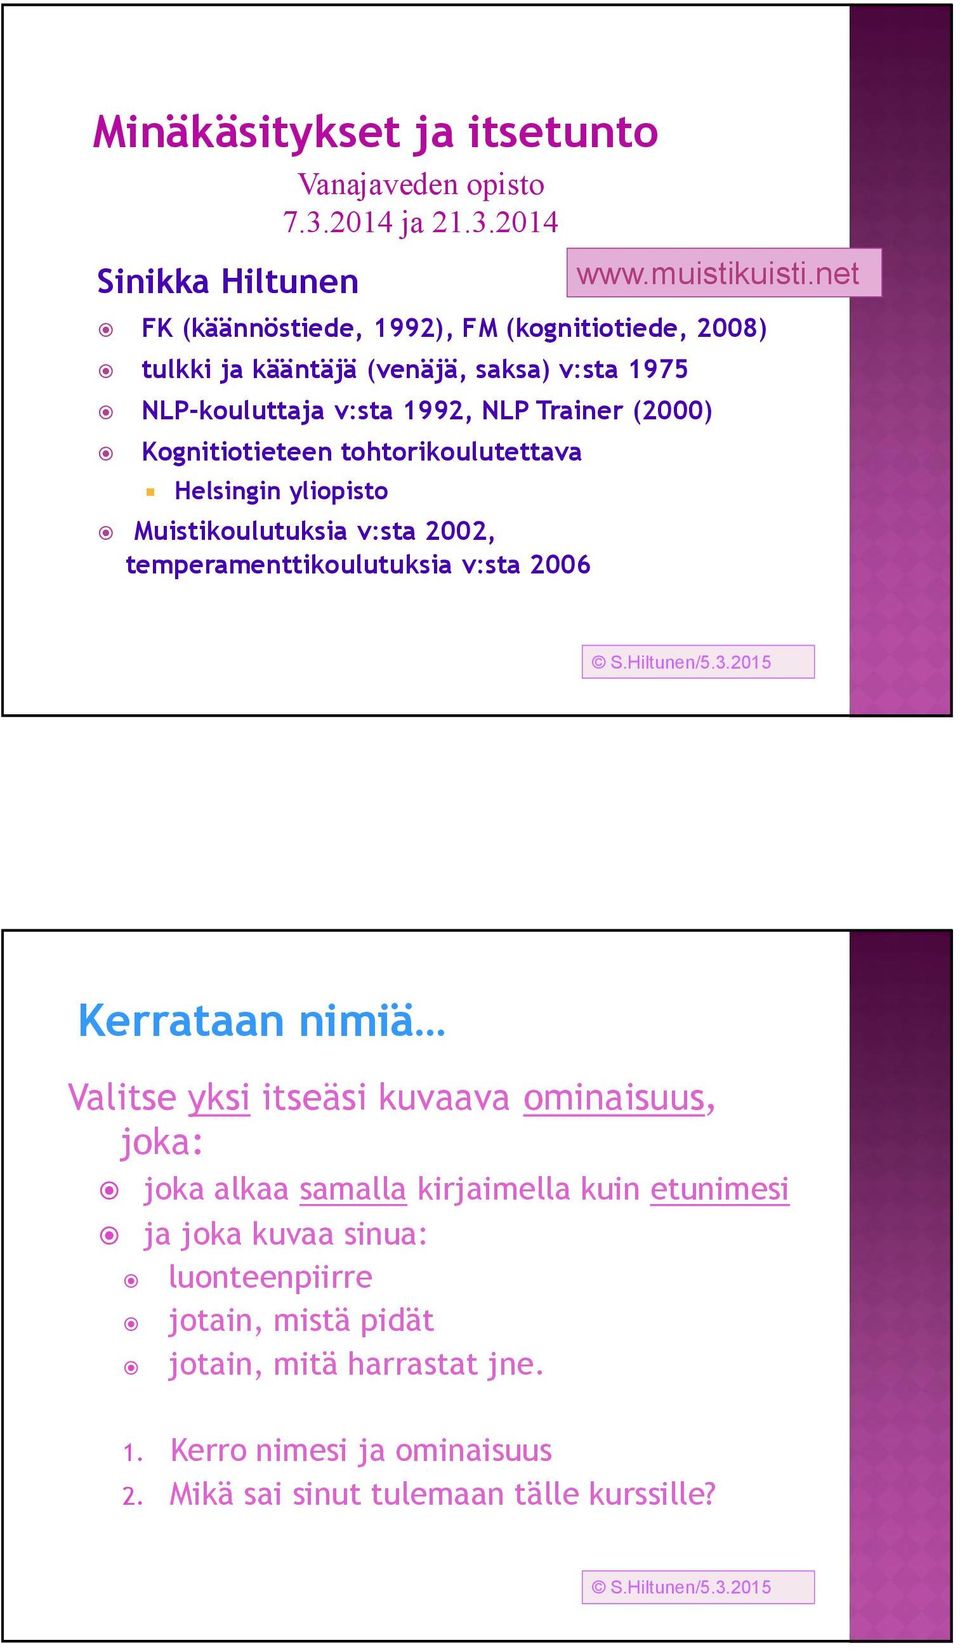 2014 ja 21.3.2014 Helsingin yliopisto Muistikoulutuksia v:sta 2002, temperamenttikoulutuksia v:sta 2006 www.muistikuisti.